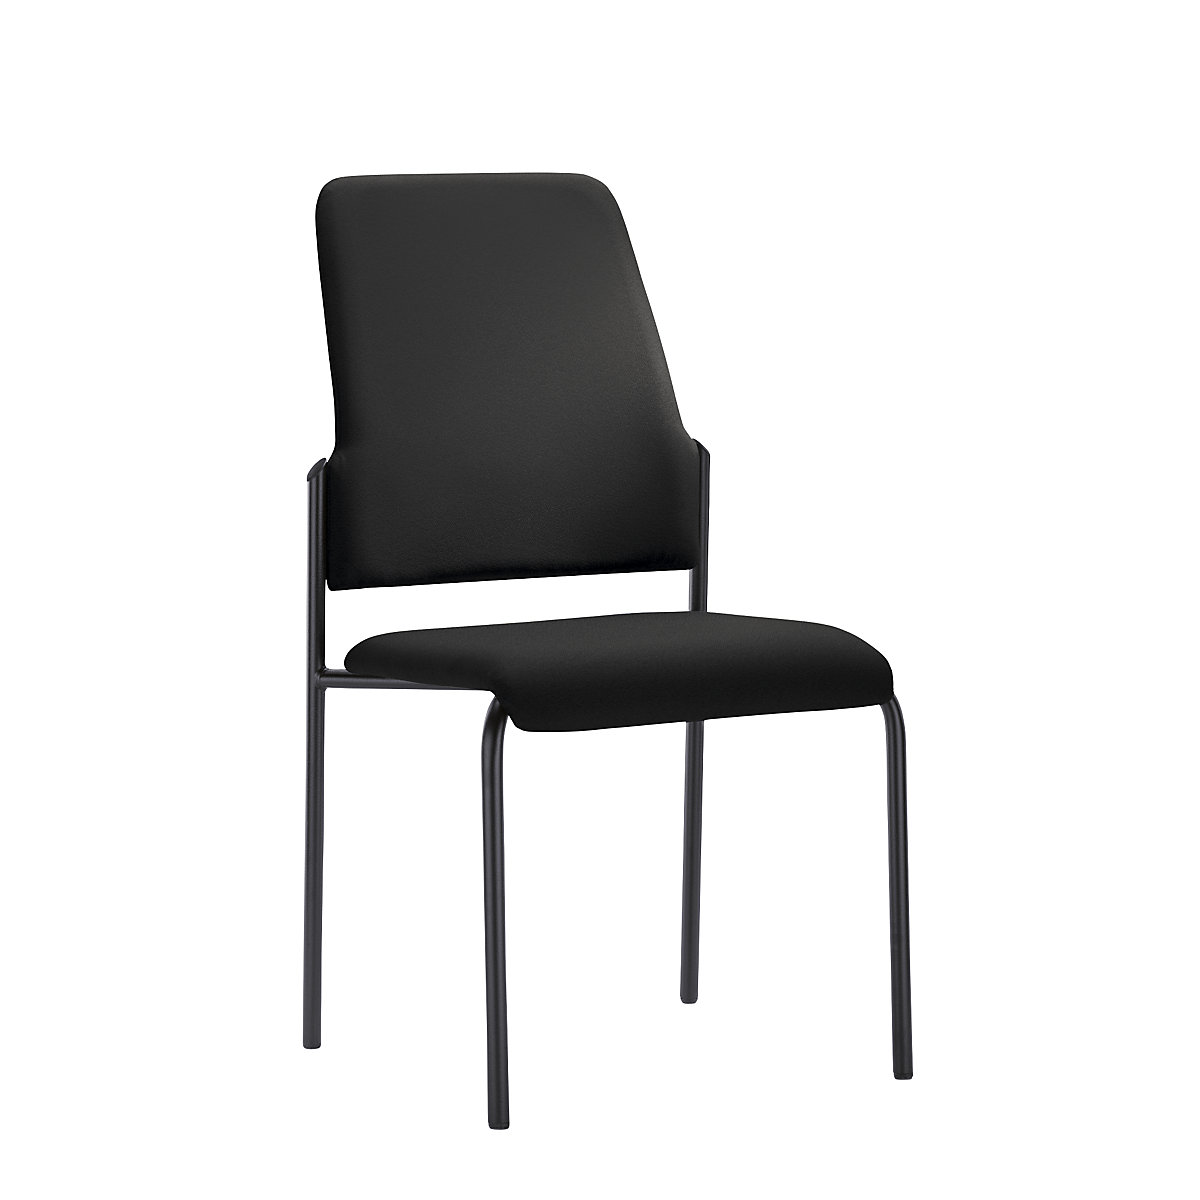 GOAL visitors' chair, 4 leg frame, pack of 2 – interstuhl, frame black, graphite black-5